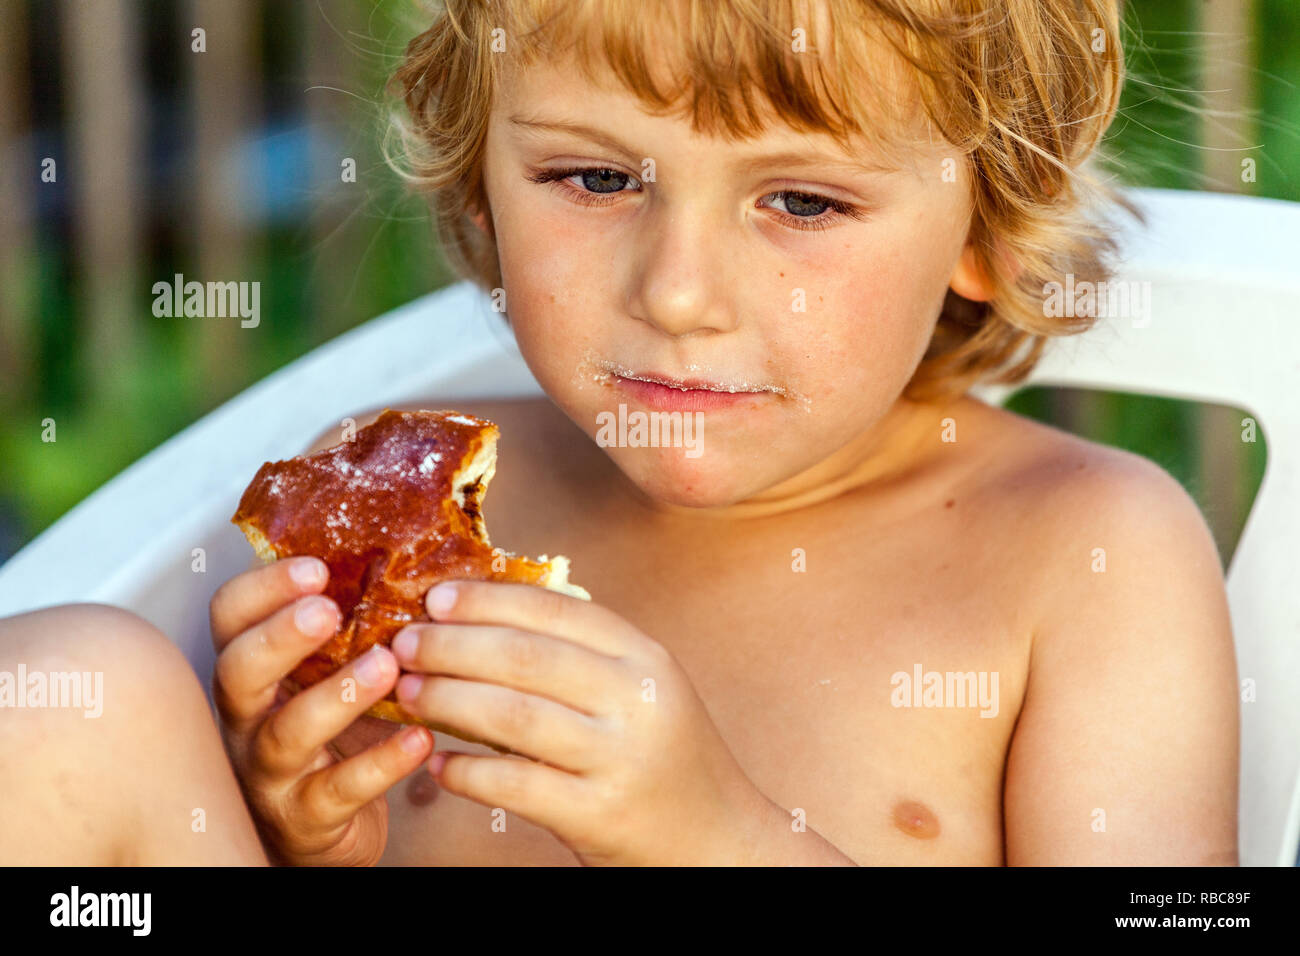 Young blonde boy, toddler eating cake, child eating Stock Photo